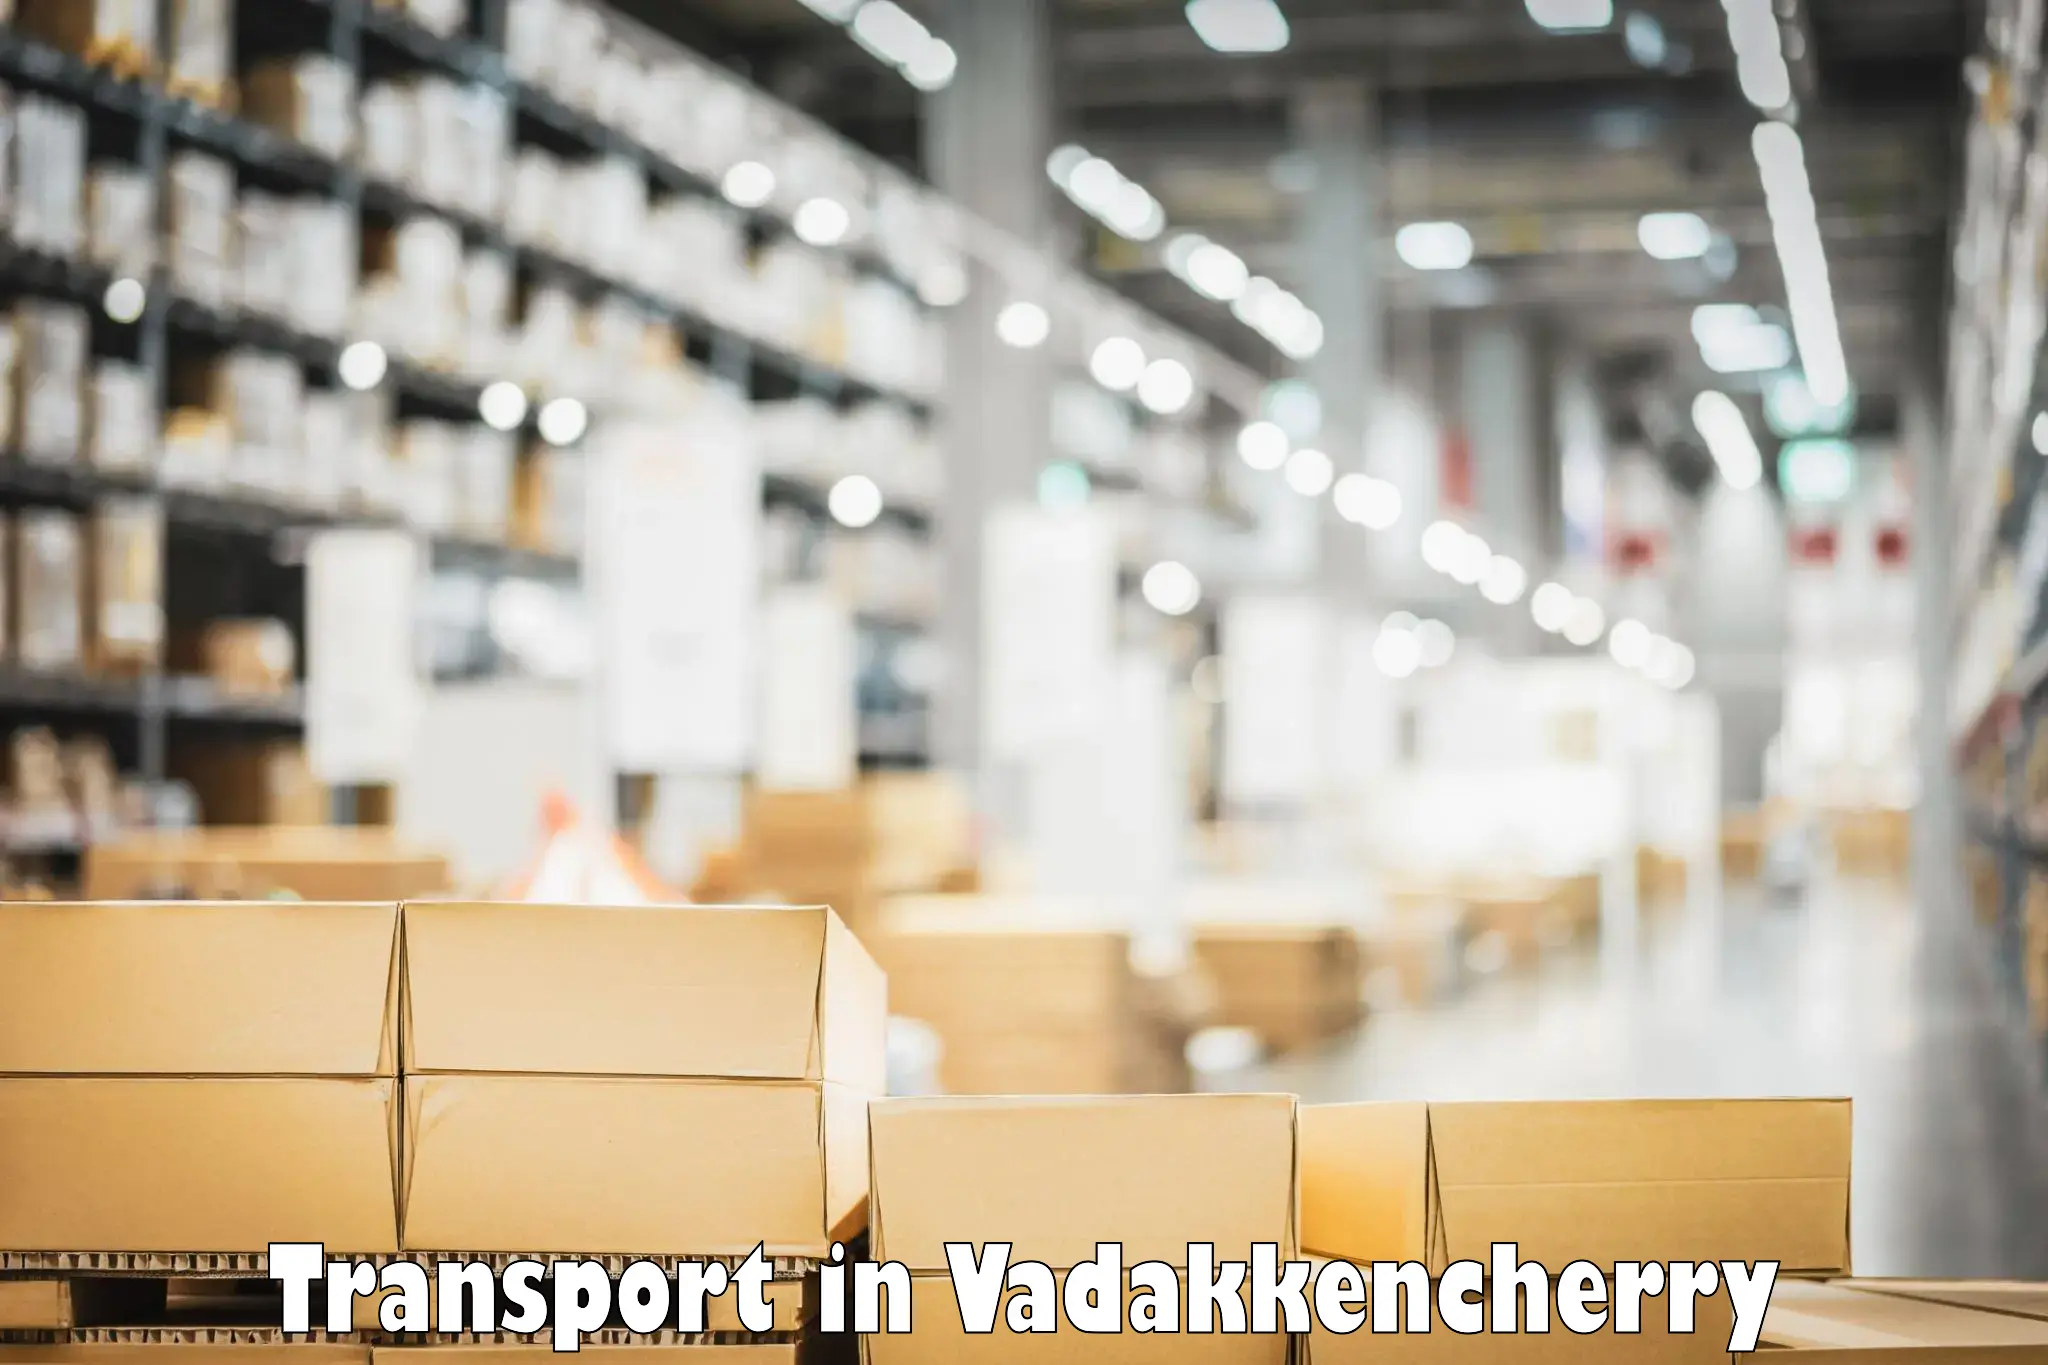 Transportation services in Vadakkencherry